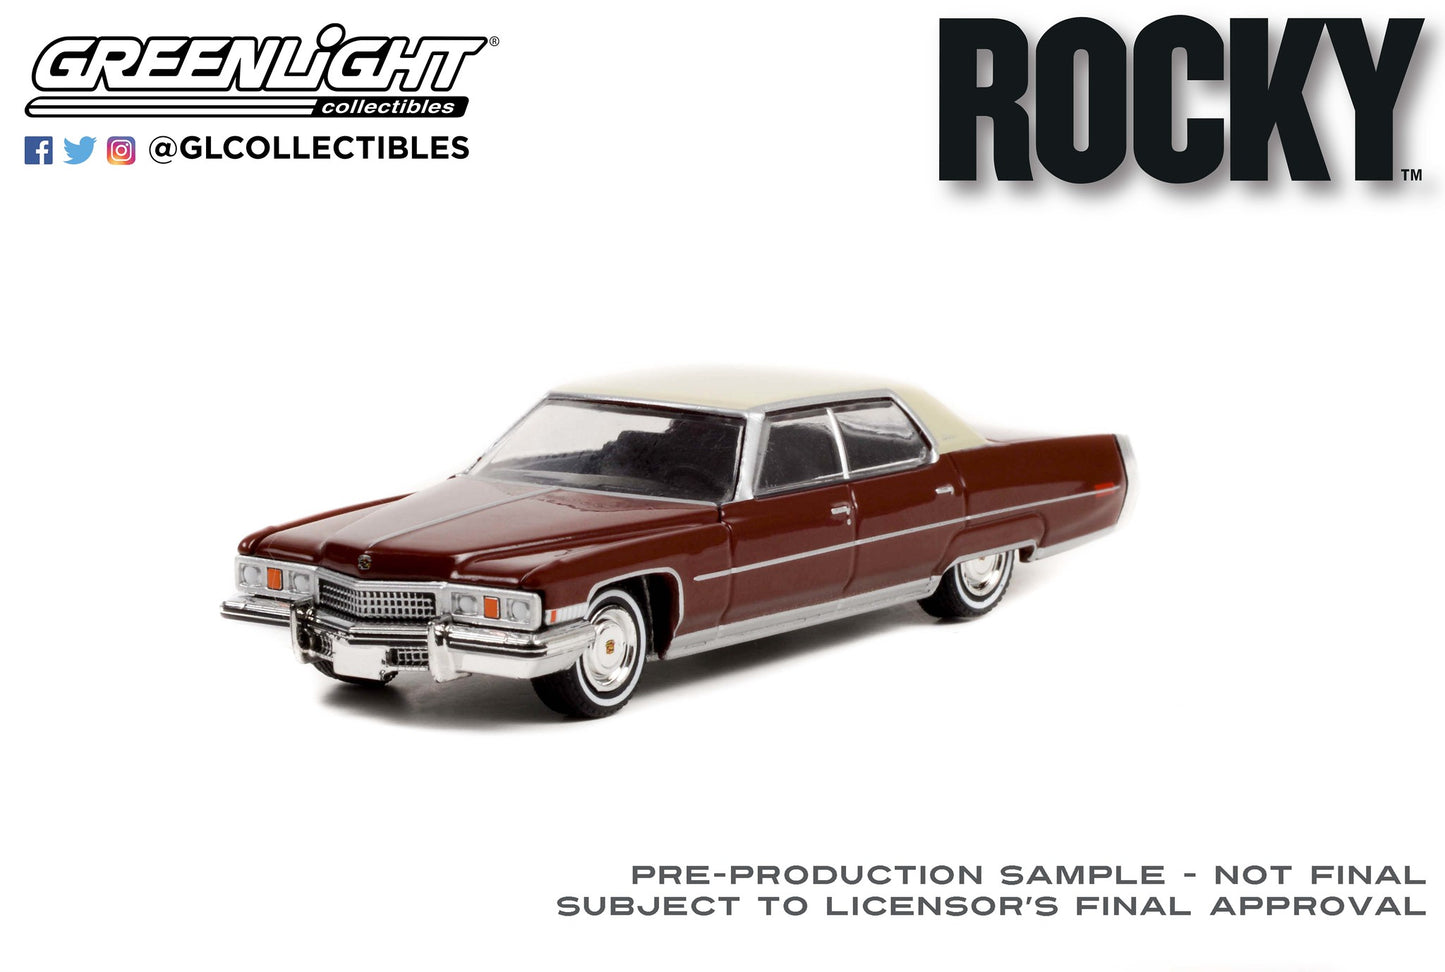 GreenLight 1:64 Hollywood Series 35 - Rocky (1976) - 1973 Cadillac Sedan deVille 44950-A